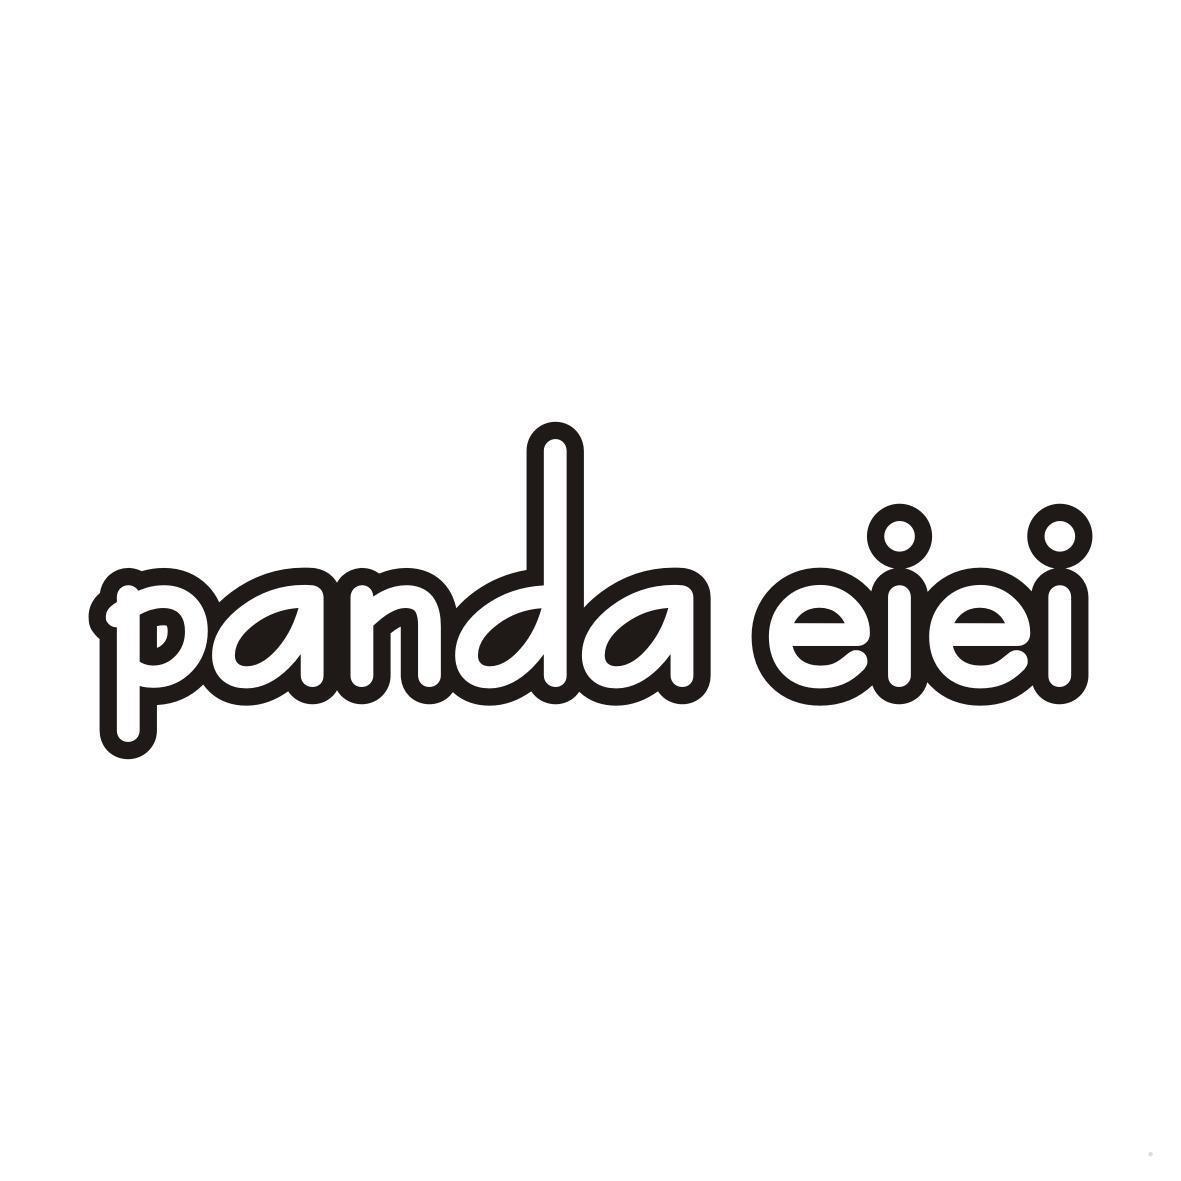 PANDA EIEI